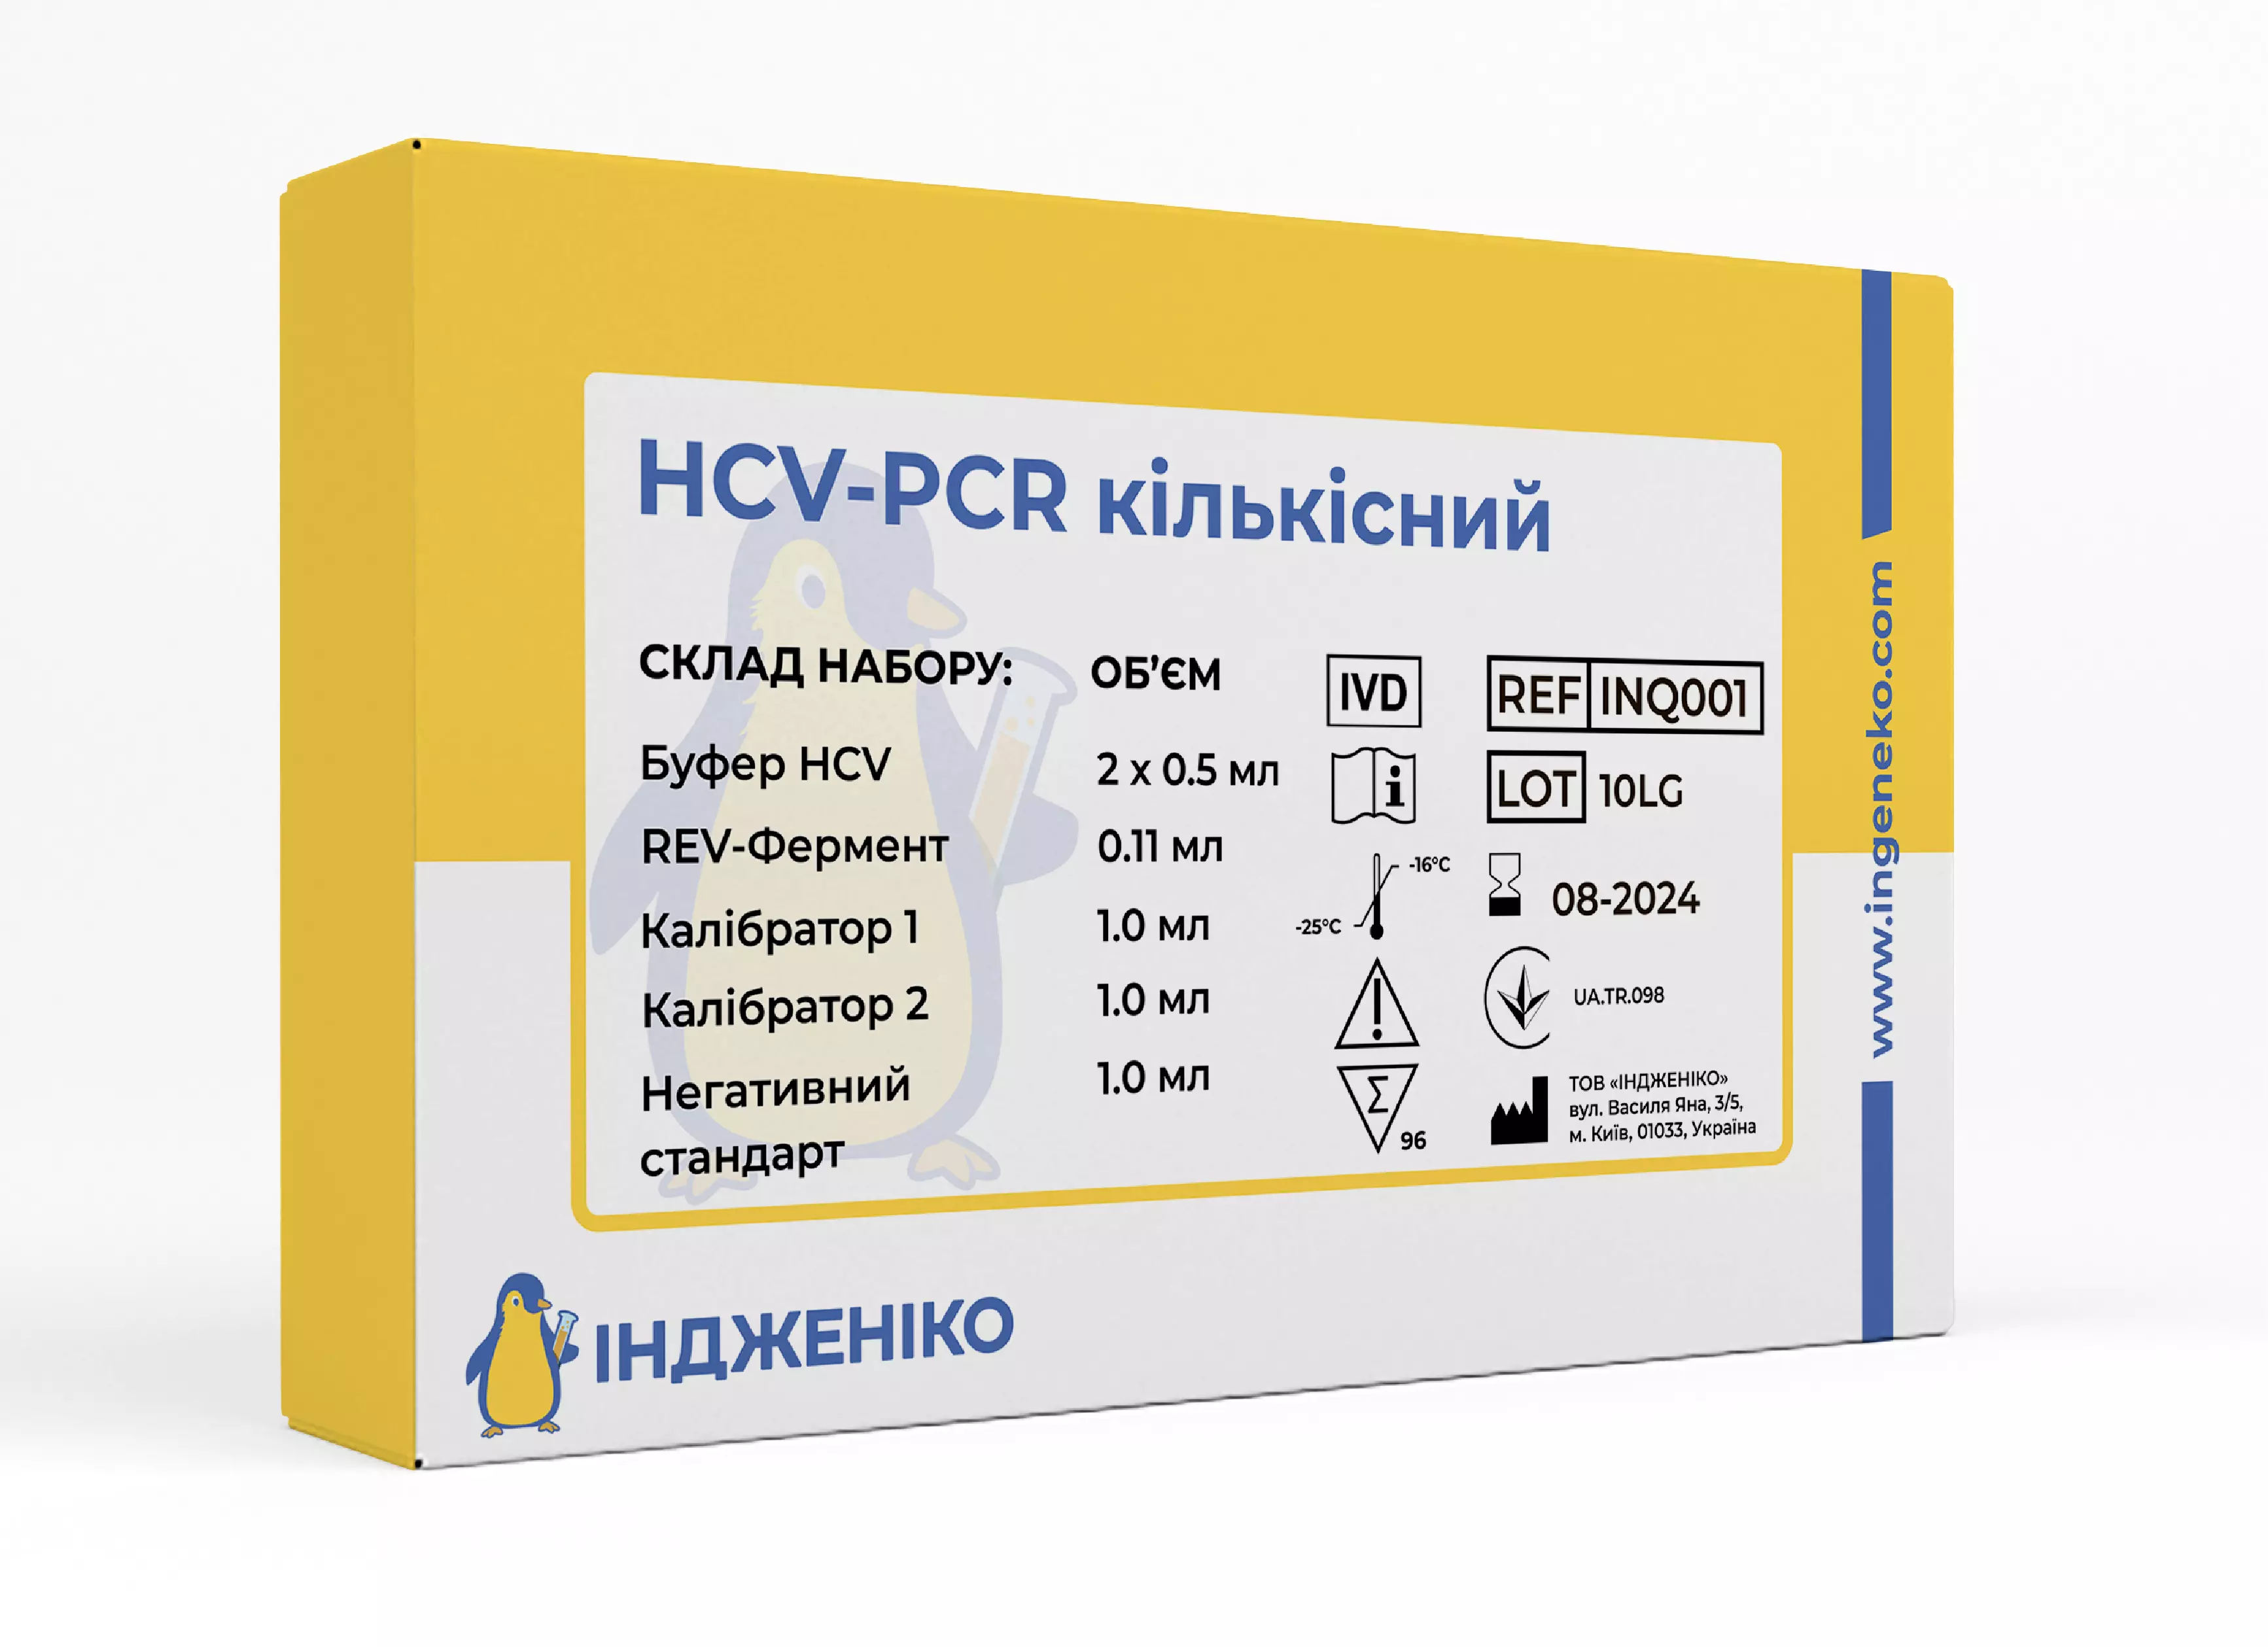 HCV-PCR quantitative